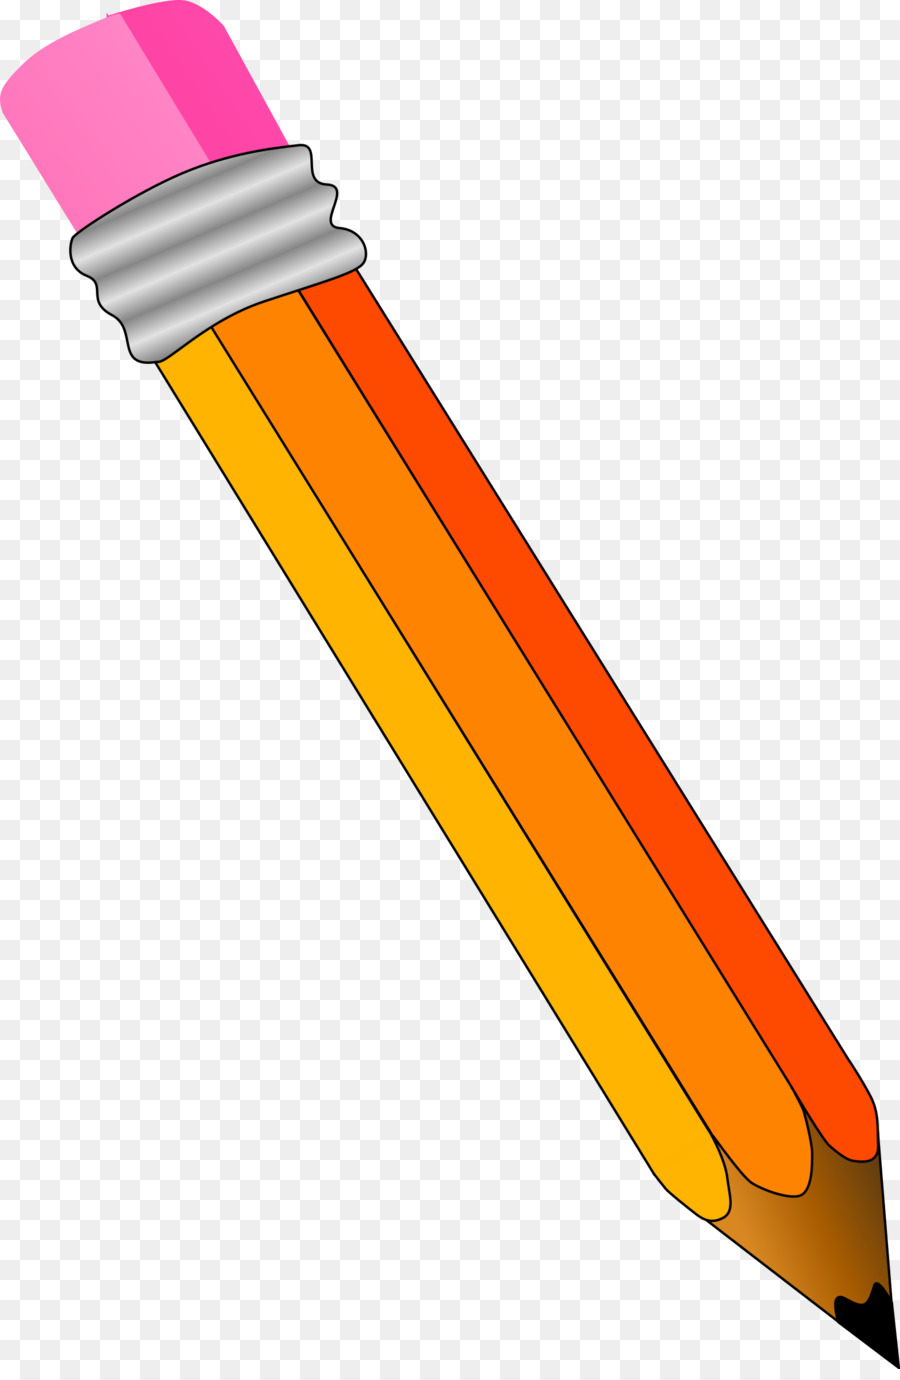 Colored pencil Clip art - Sharpened Pencil Cliparts png download - 1578*2400 - Free Transparent Pencil png Download.